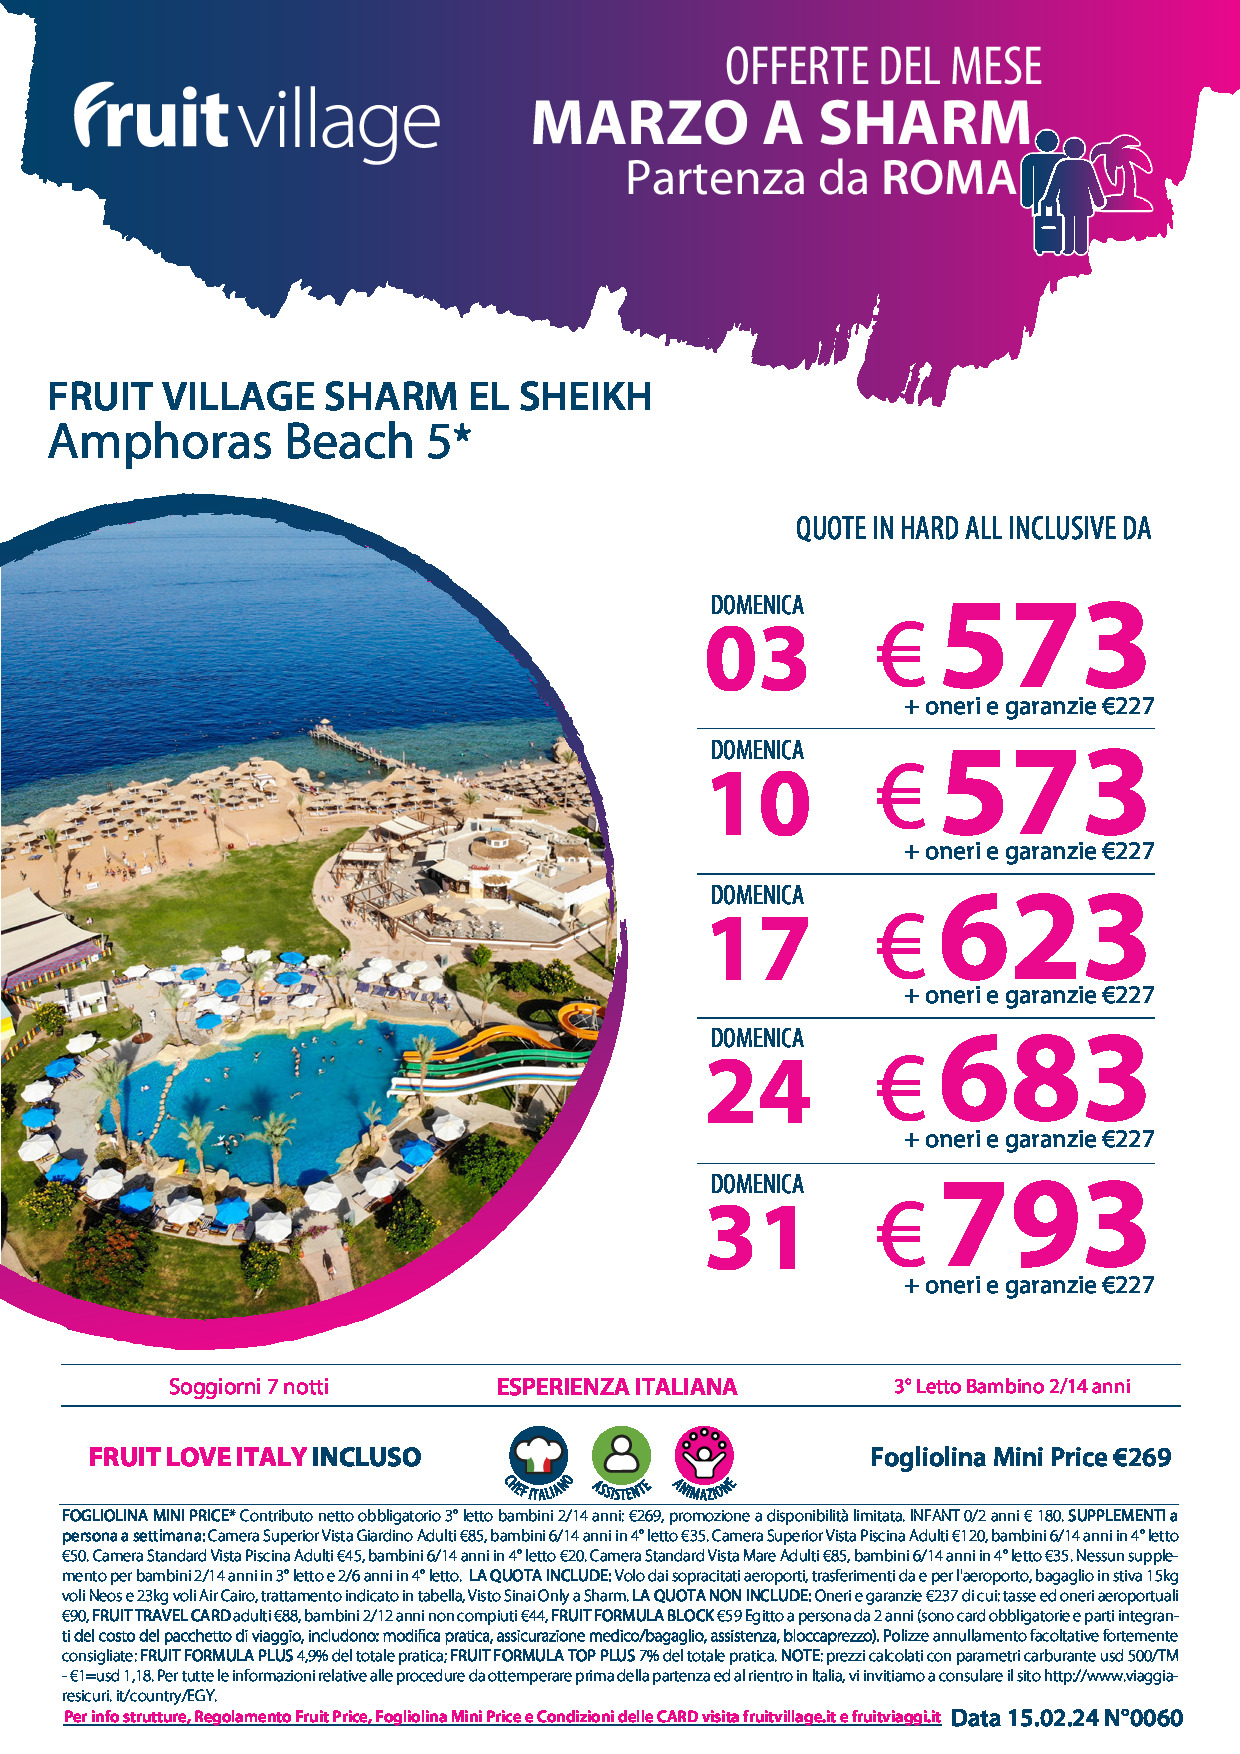 FRUIT VILLAGE Sharm El Sheikh Amphoras Beach - da Roma a Marzo